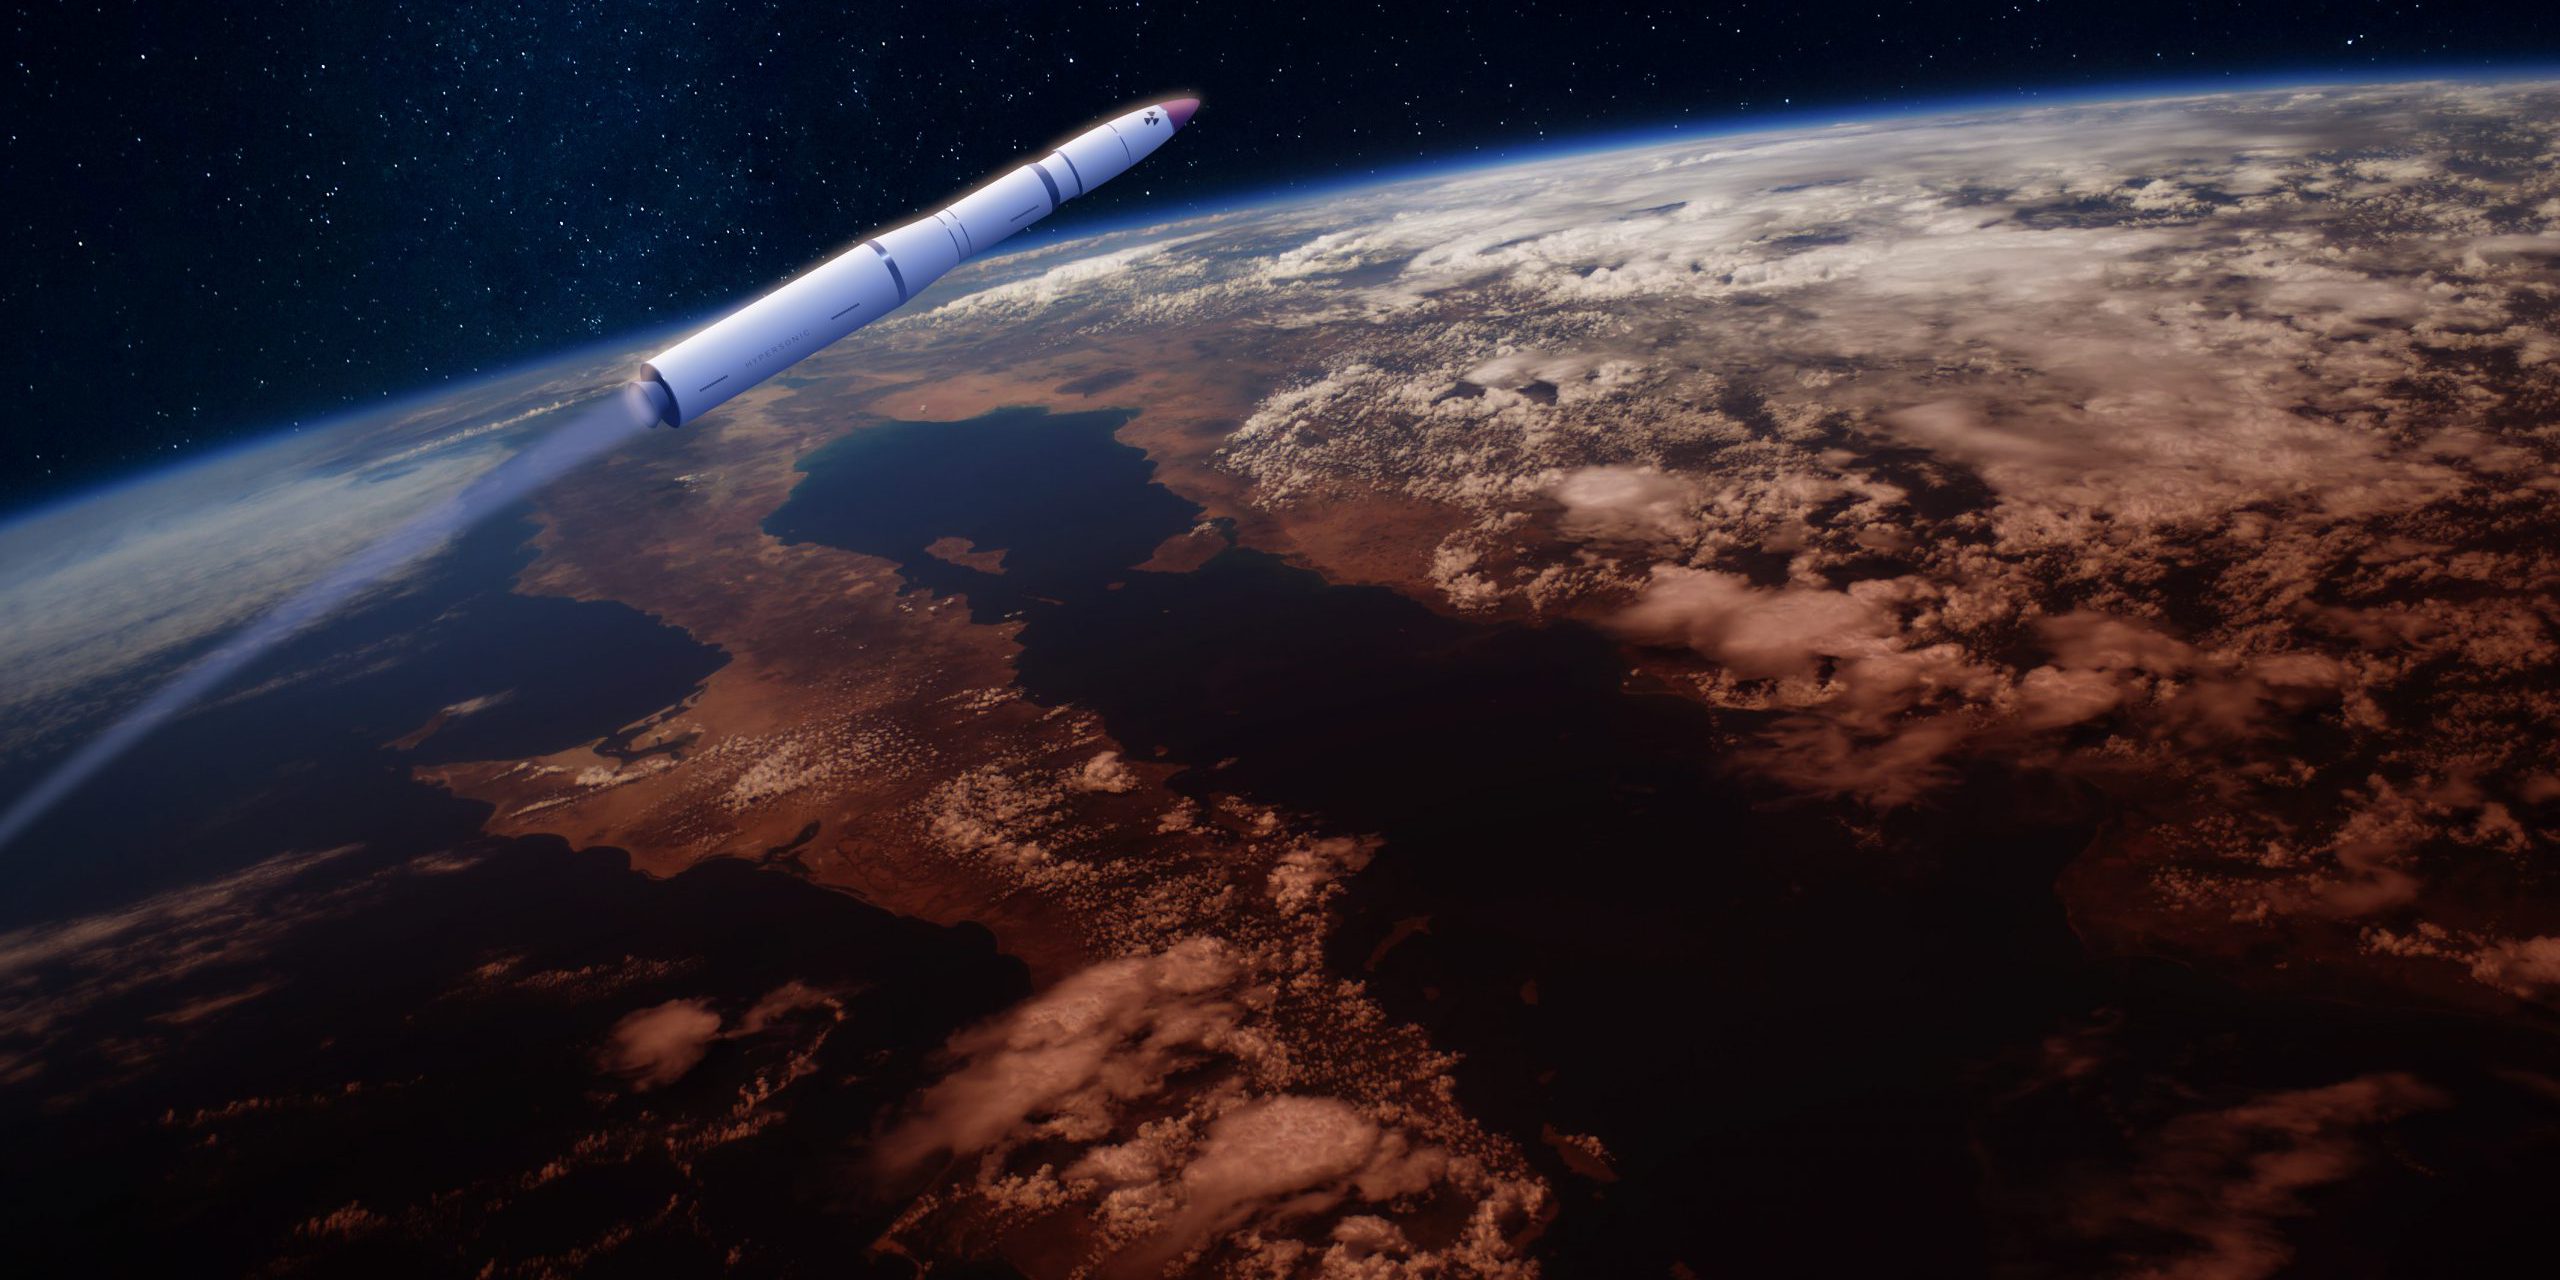 Shutterstock, https://www.shutterstock.com/image-illustration/hypersonic-missile-rocket-over-apocalyptic-earth-1050991484